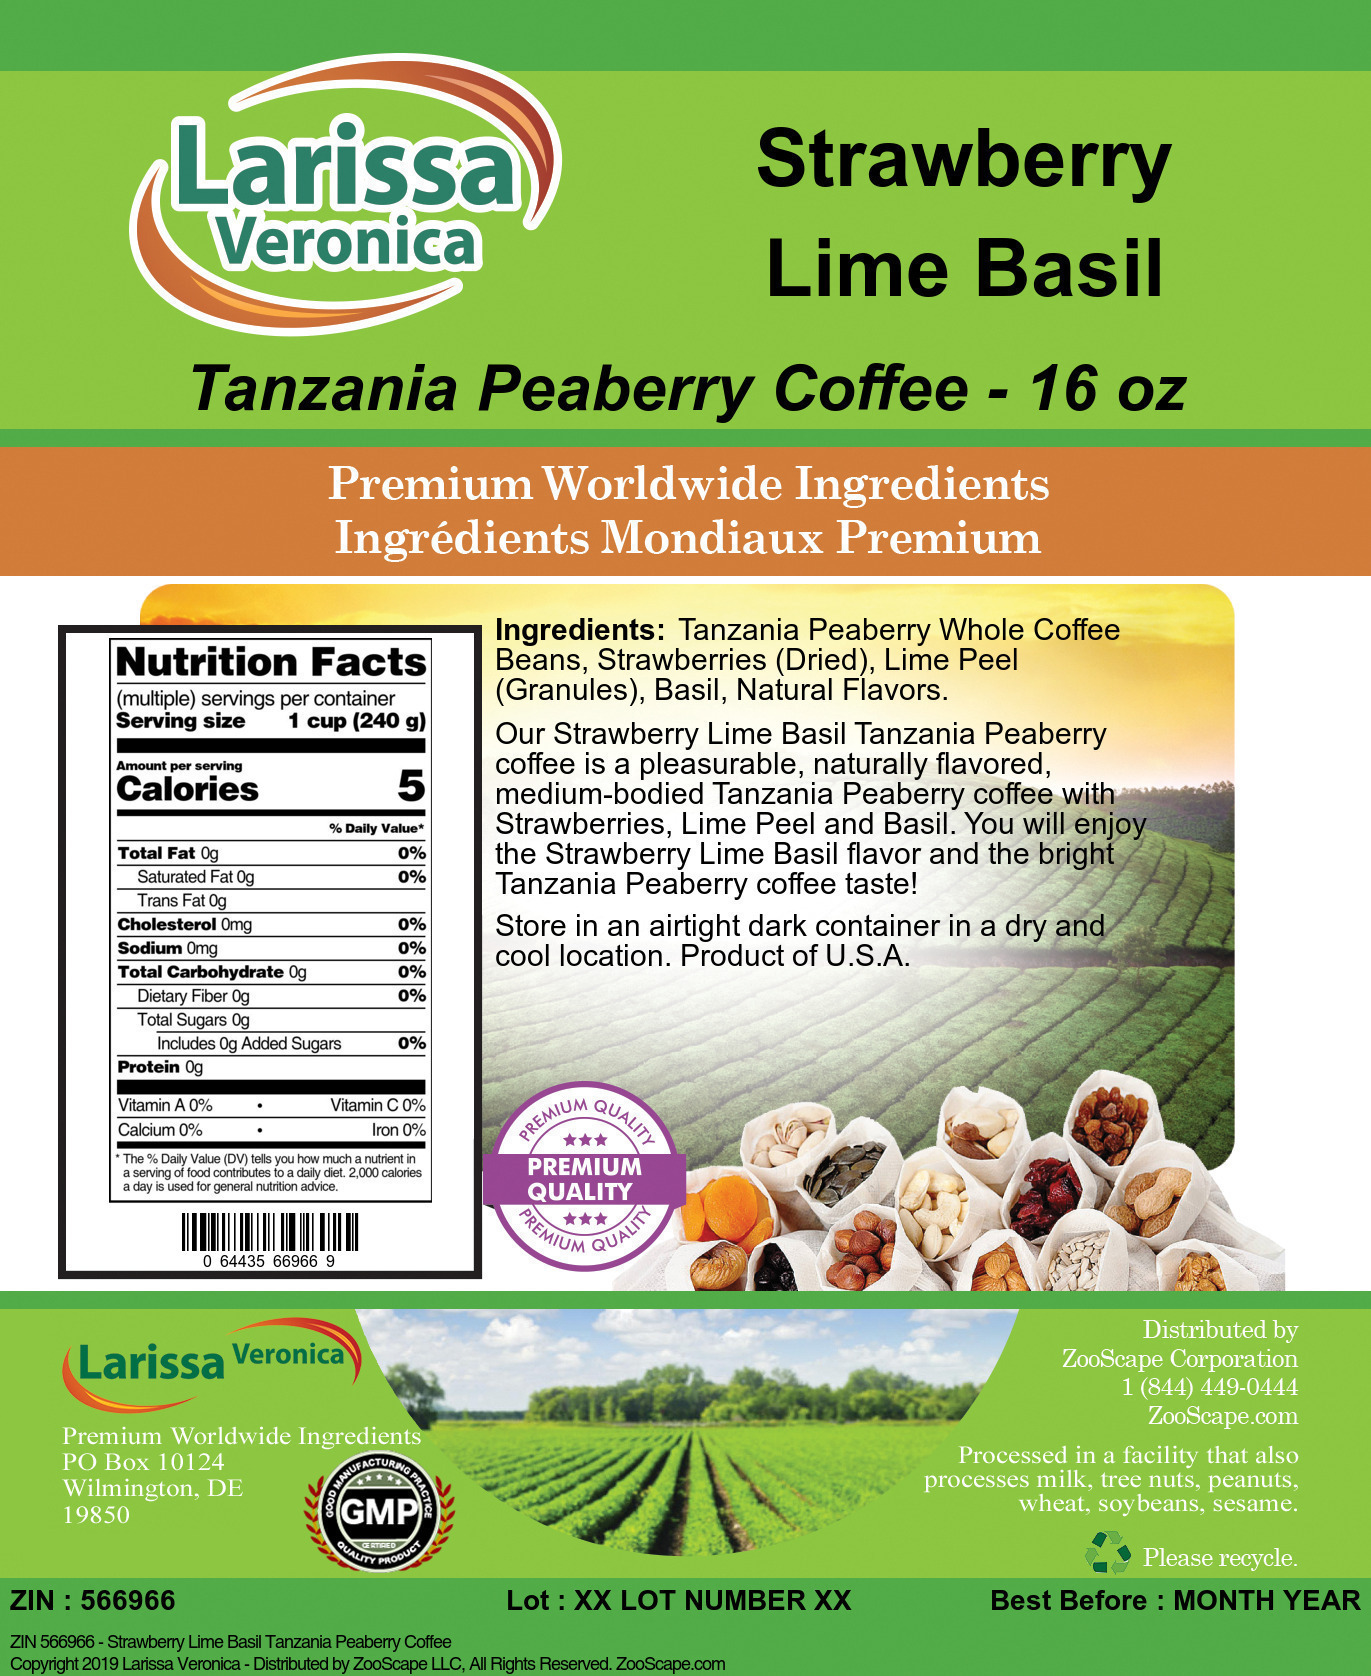 Strawberry Lime Basil Tanzania Peaberry Coffee - Label